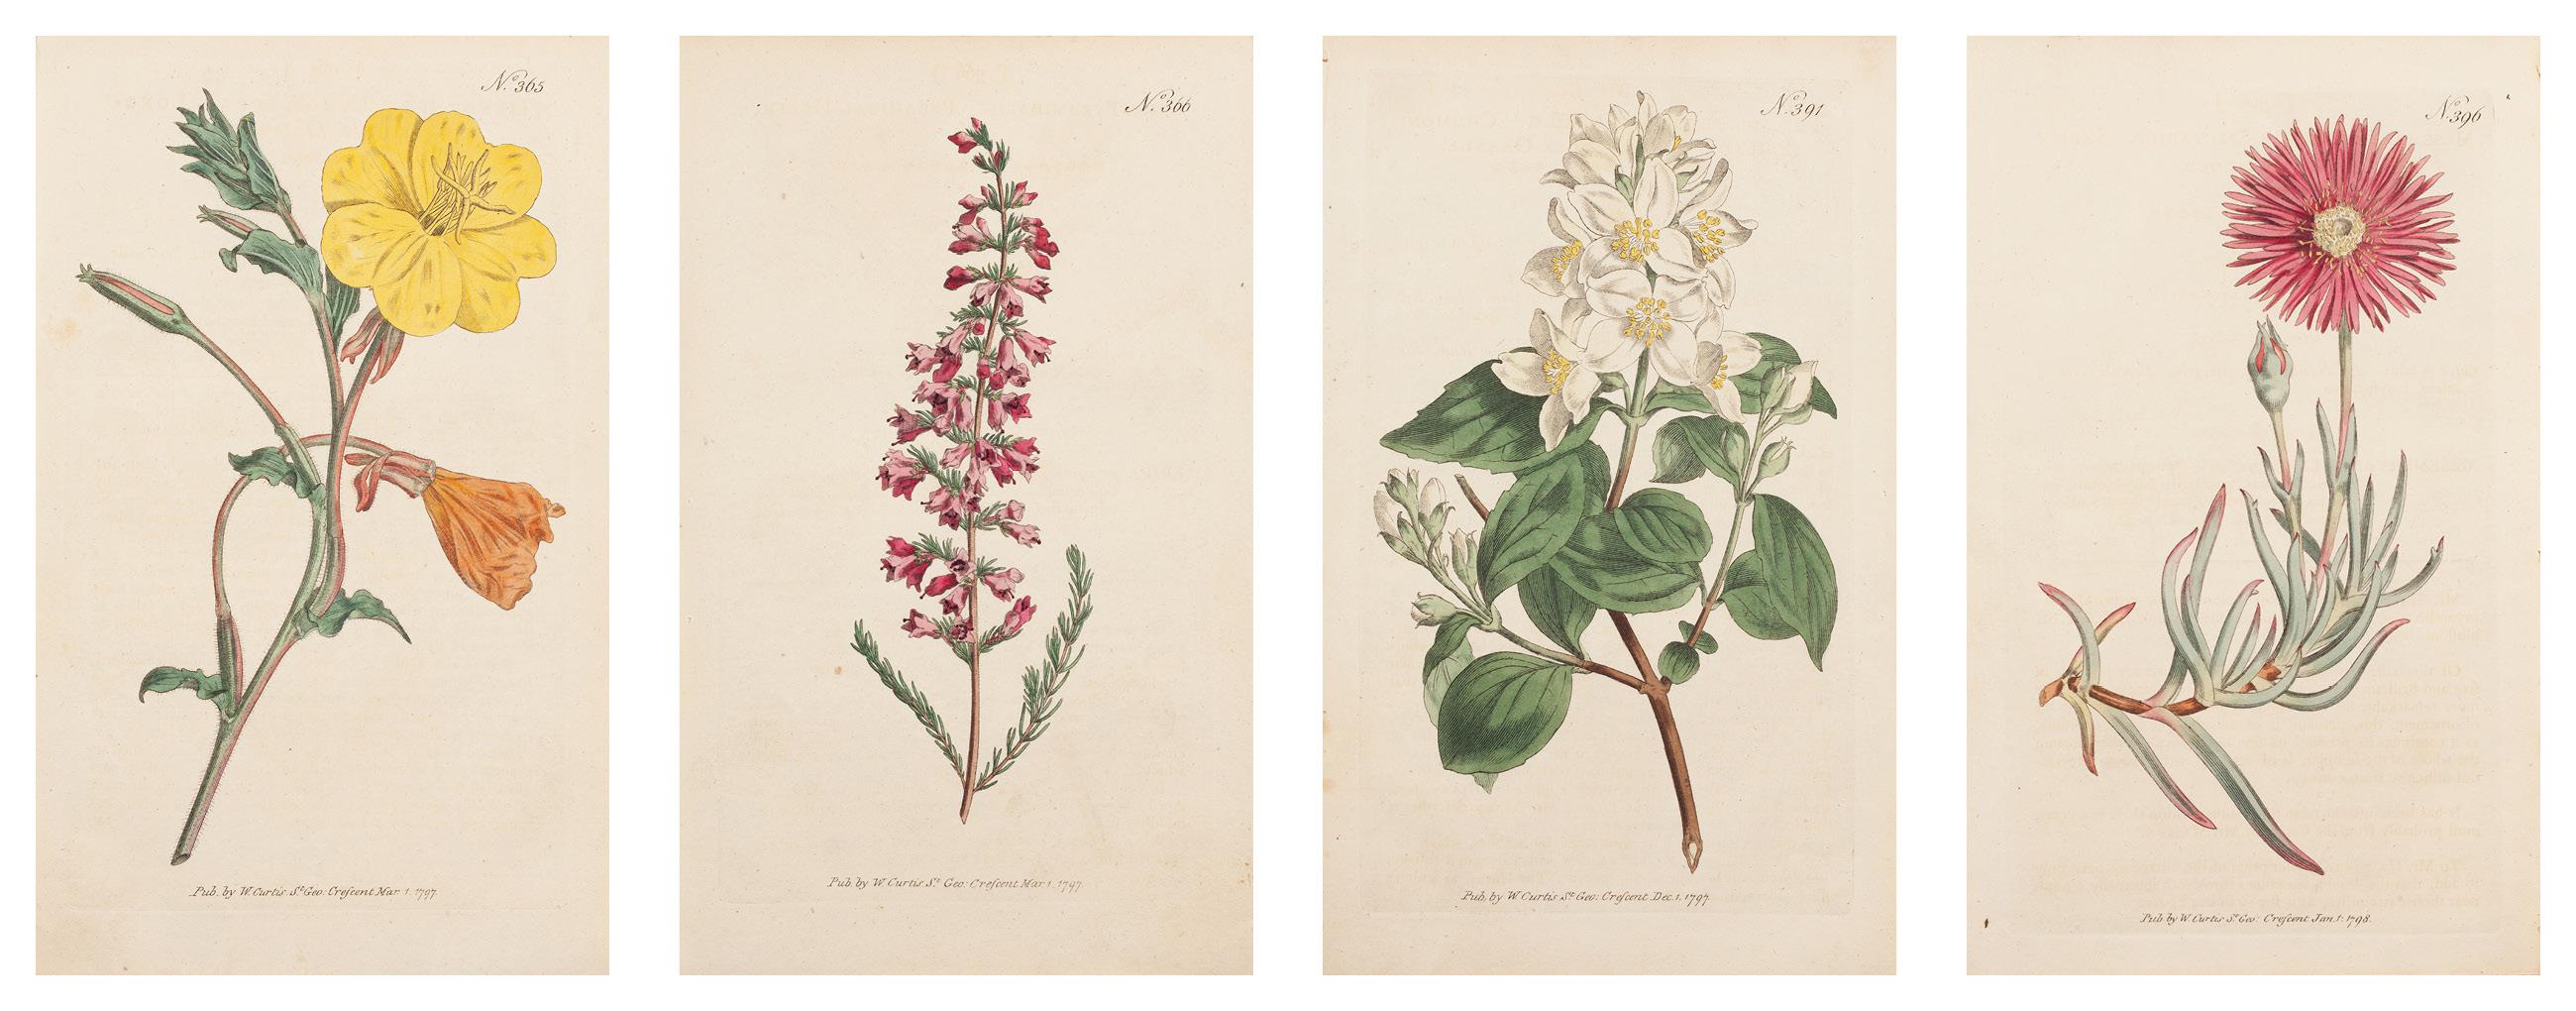 William Curtis Print - 1797 Hand-colored Botanical Suite Plates 365, 366, 391, 396